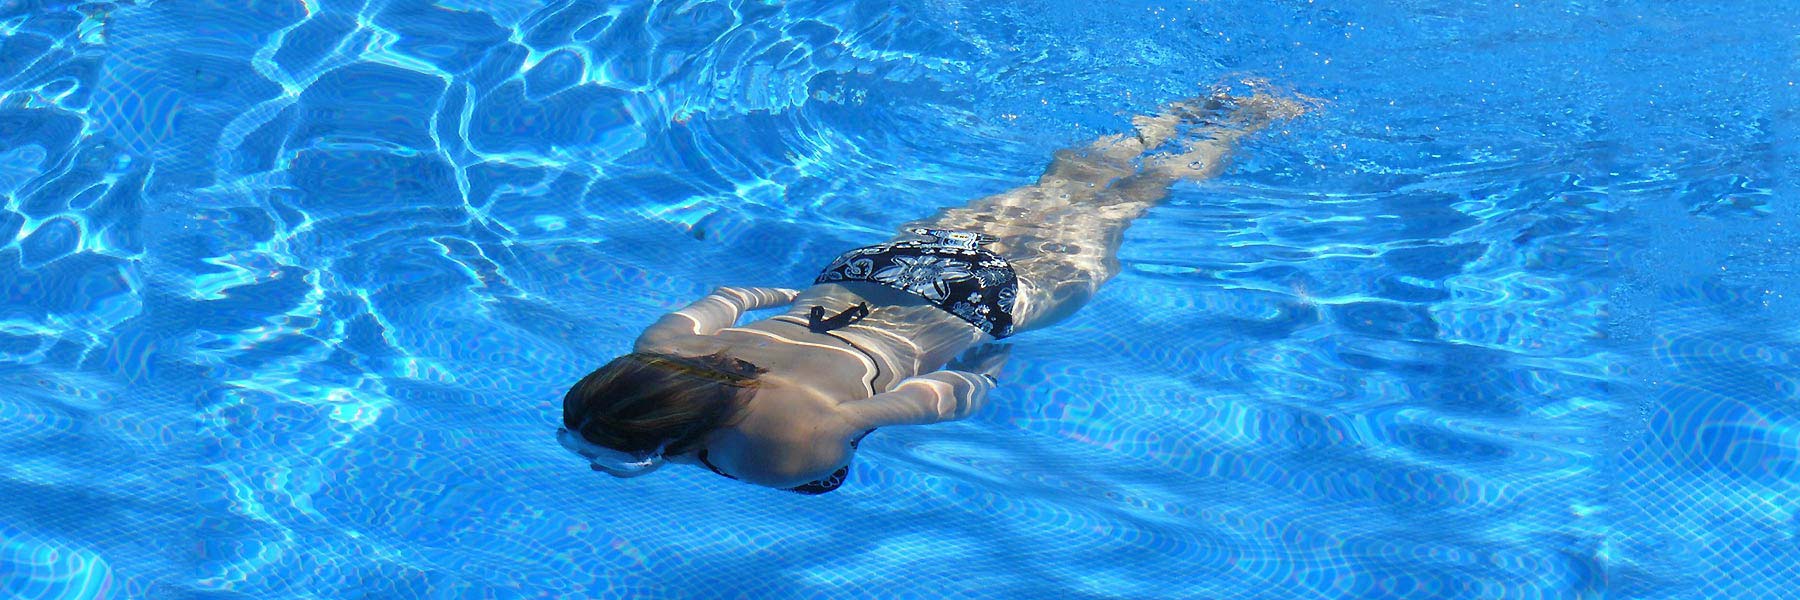 Contact Laure, pool maintenance : Contacter Laure, entretien piscine